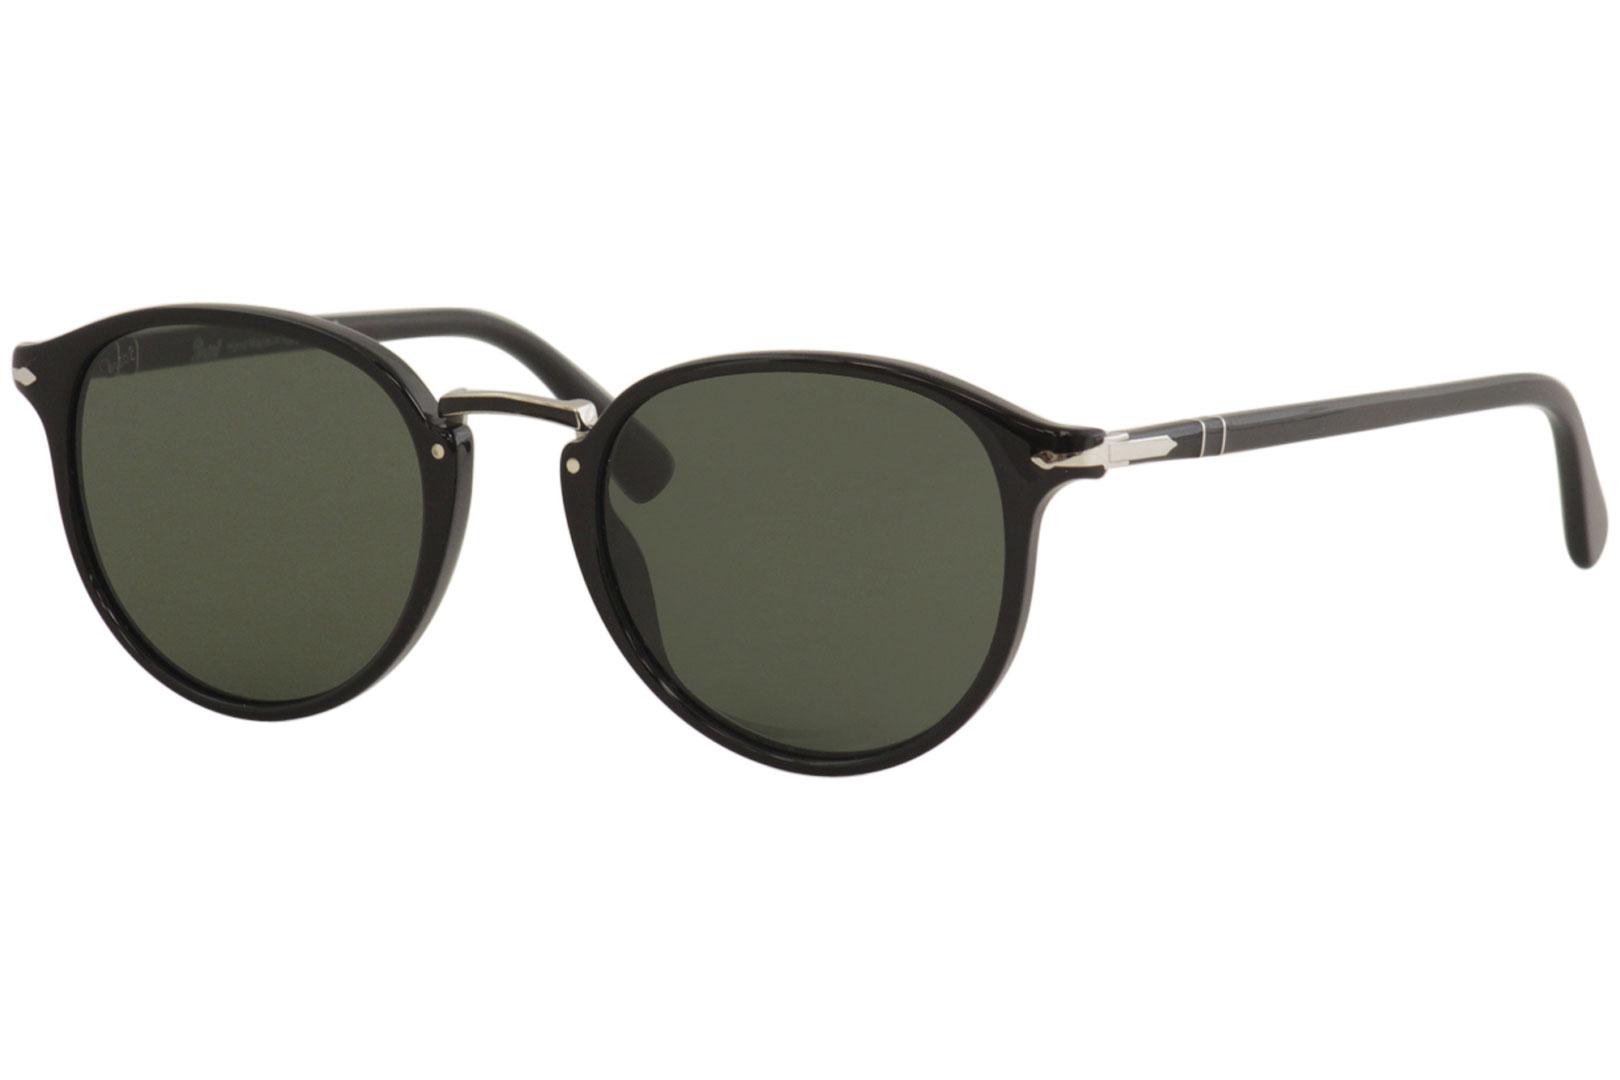 Authentic Persol 0PO 3210 S 24/57 HAVANA Polarized Sunglasses 